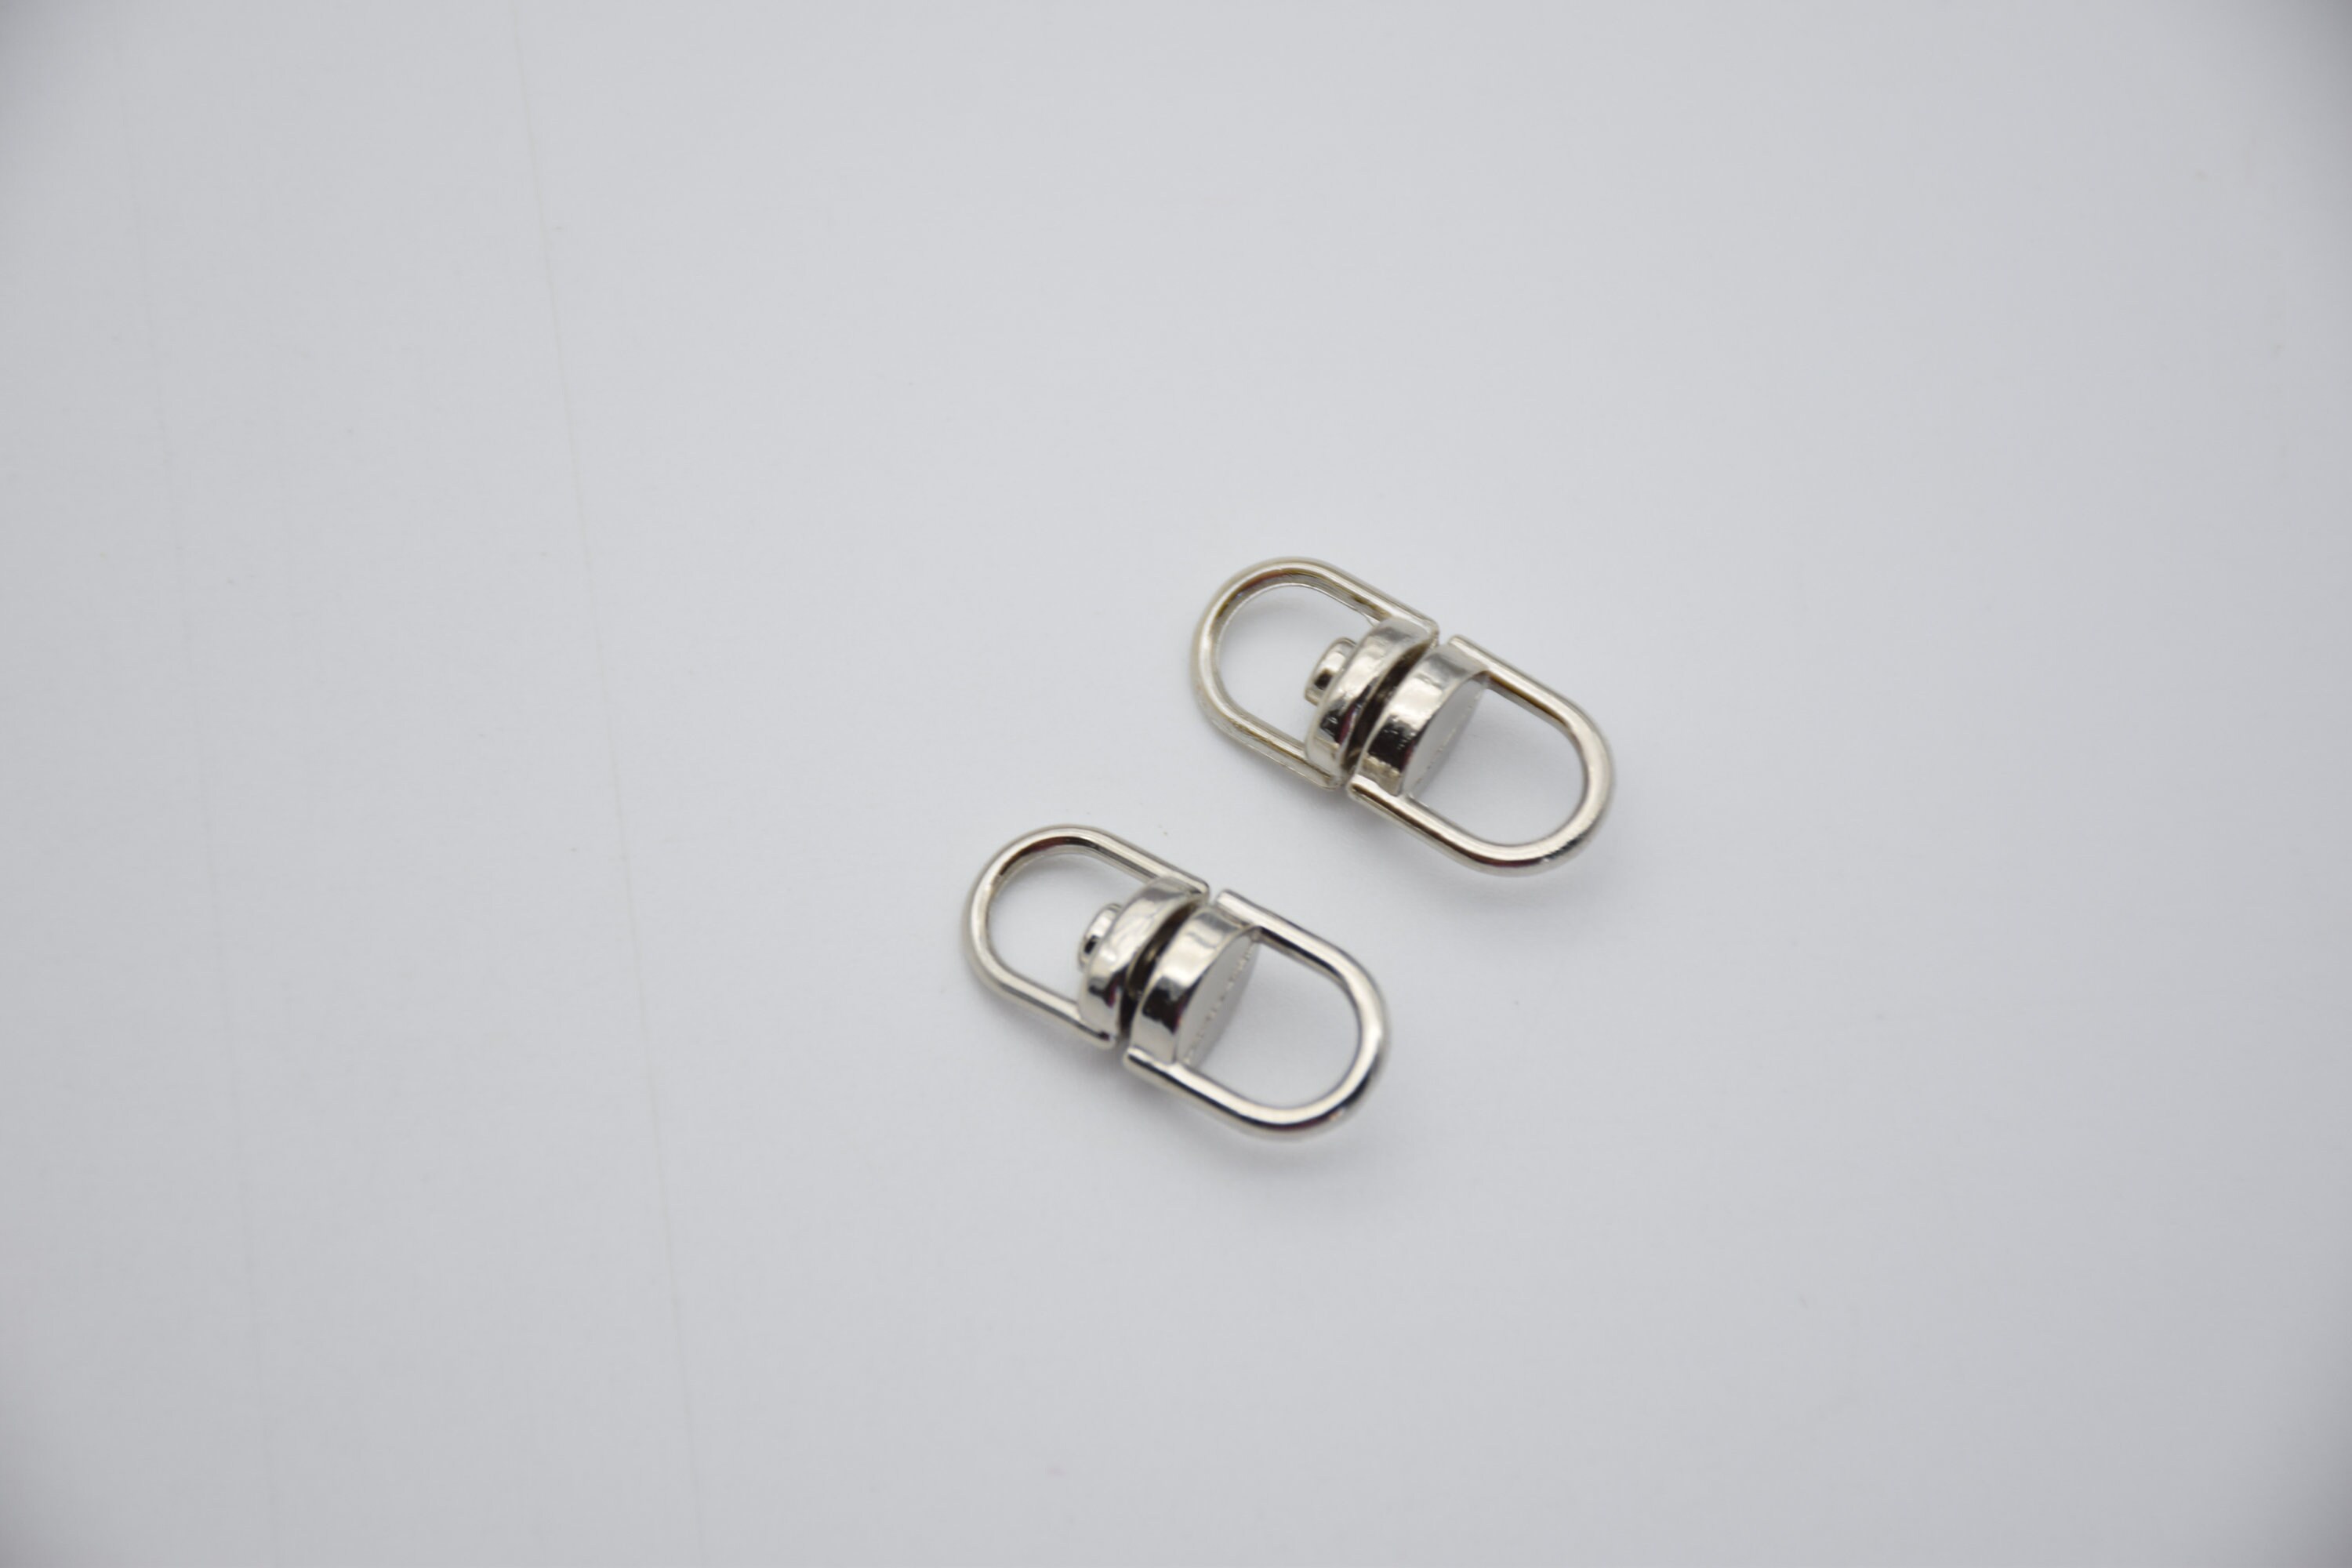 Titanium Key Holder Double Row Key Clips For Keychains Belt-Taobao